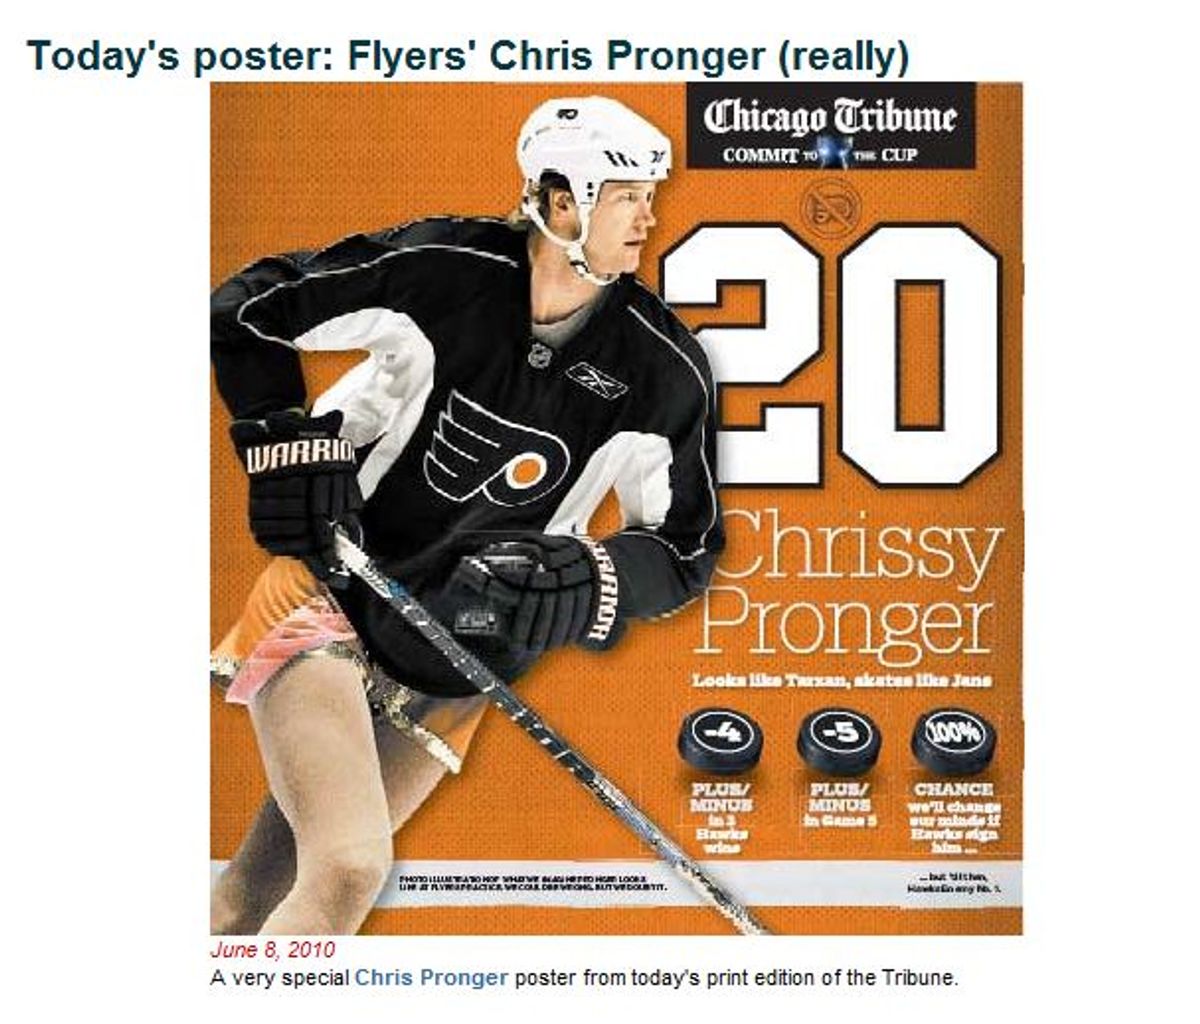 Chicago Tribune mocks Philadelphia Flyers' "Chrissy" Pronger. (Brian Frederick)